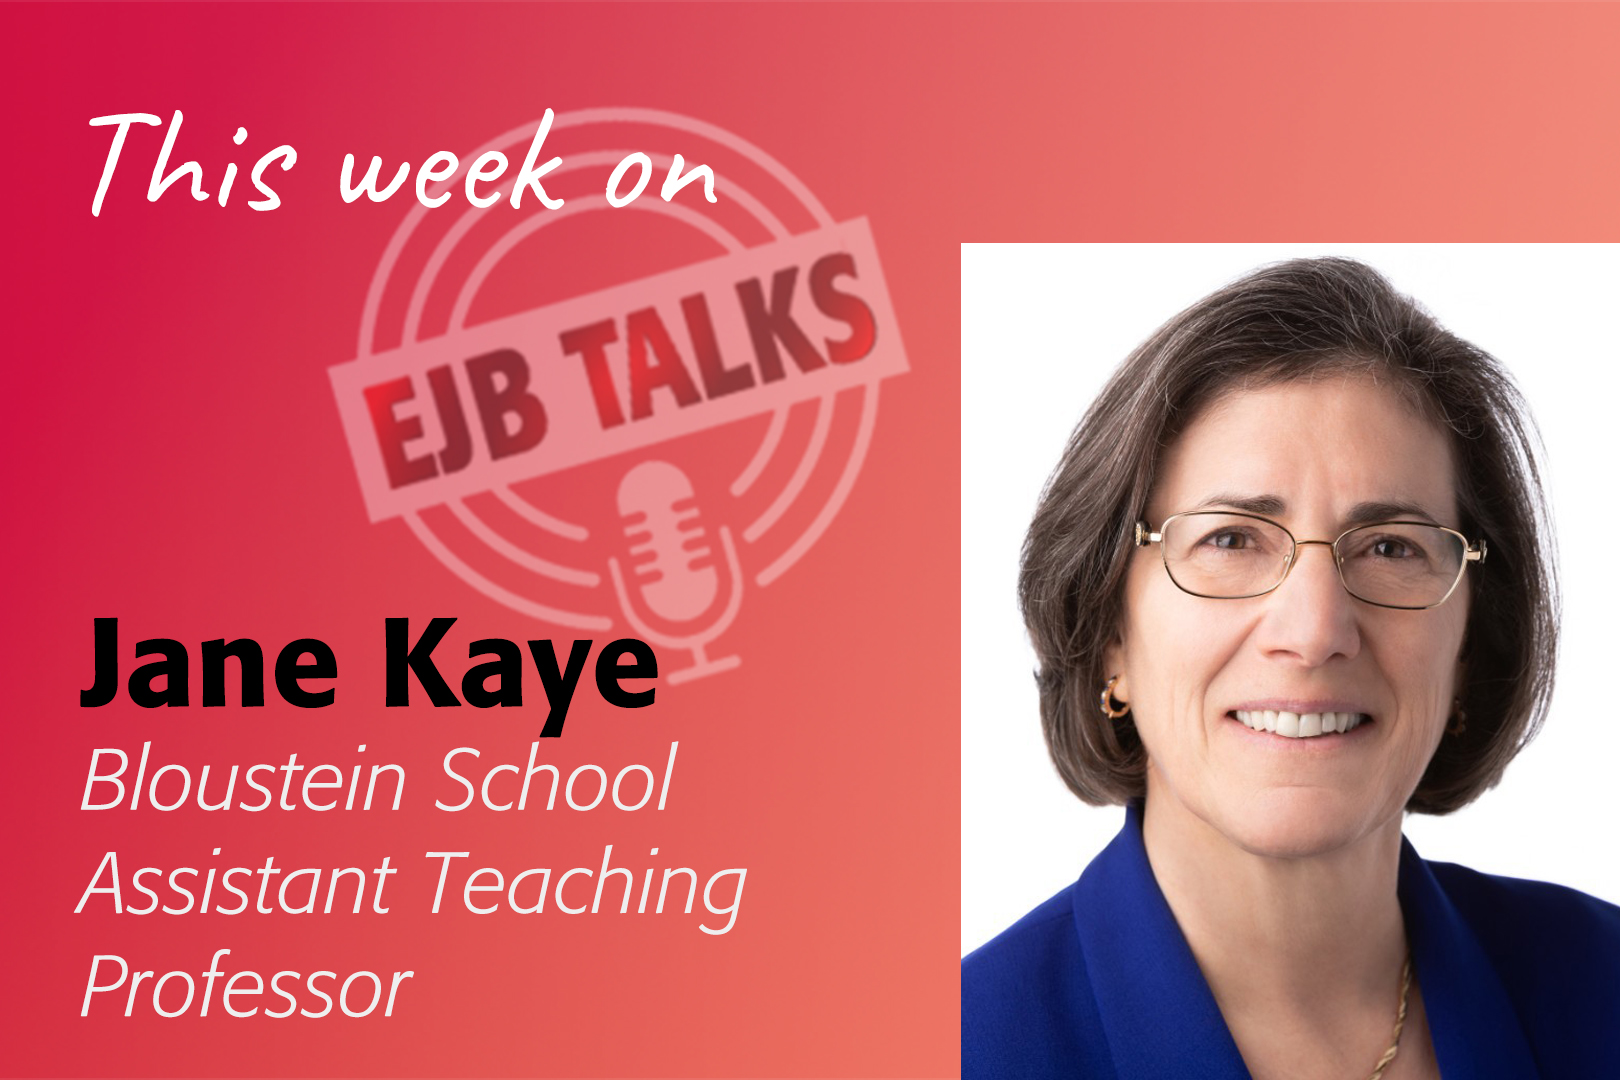 Bloustein School Assistant Teaching Professor Jane Kaye, Health Administration, EJB Talks